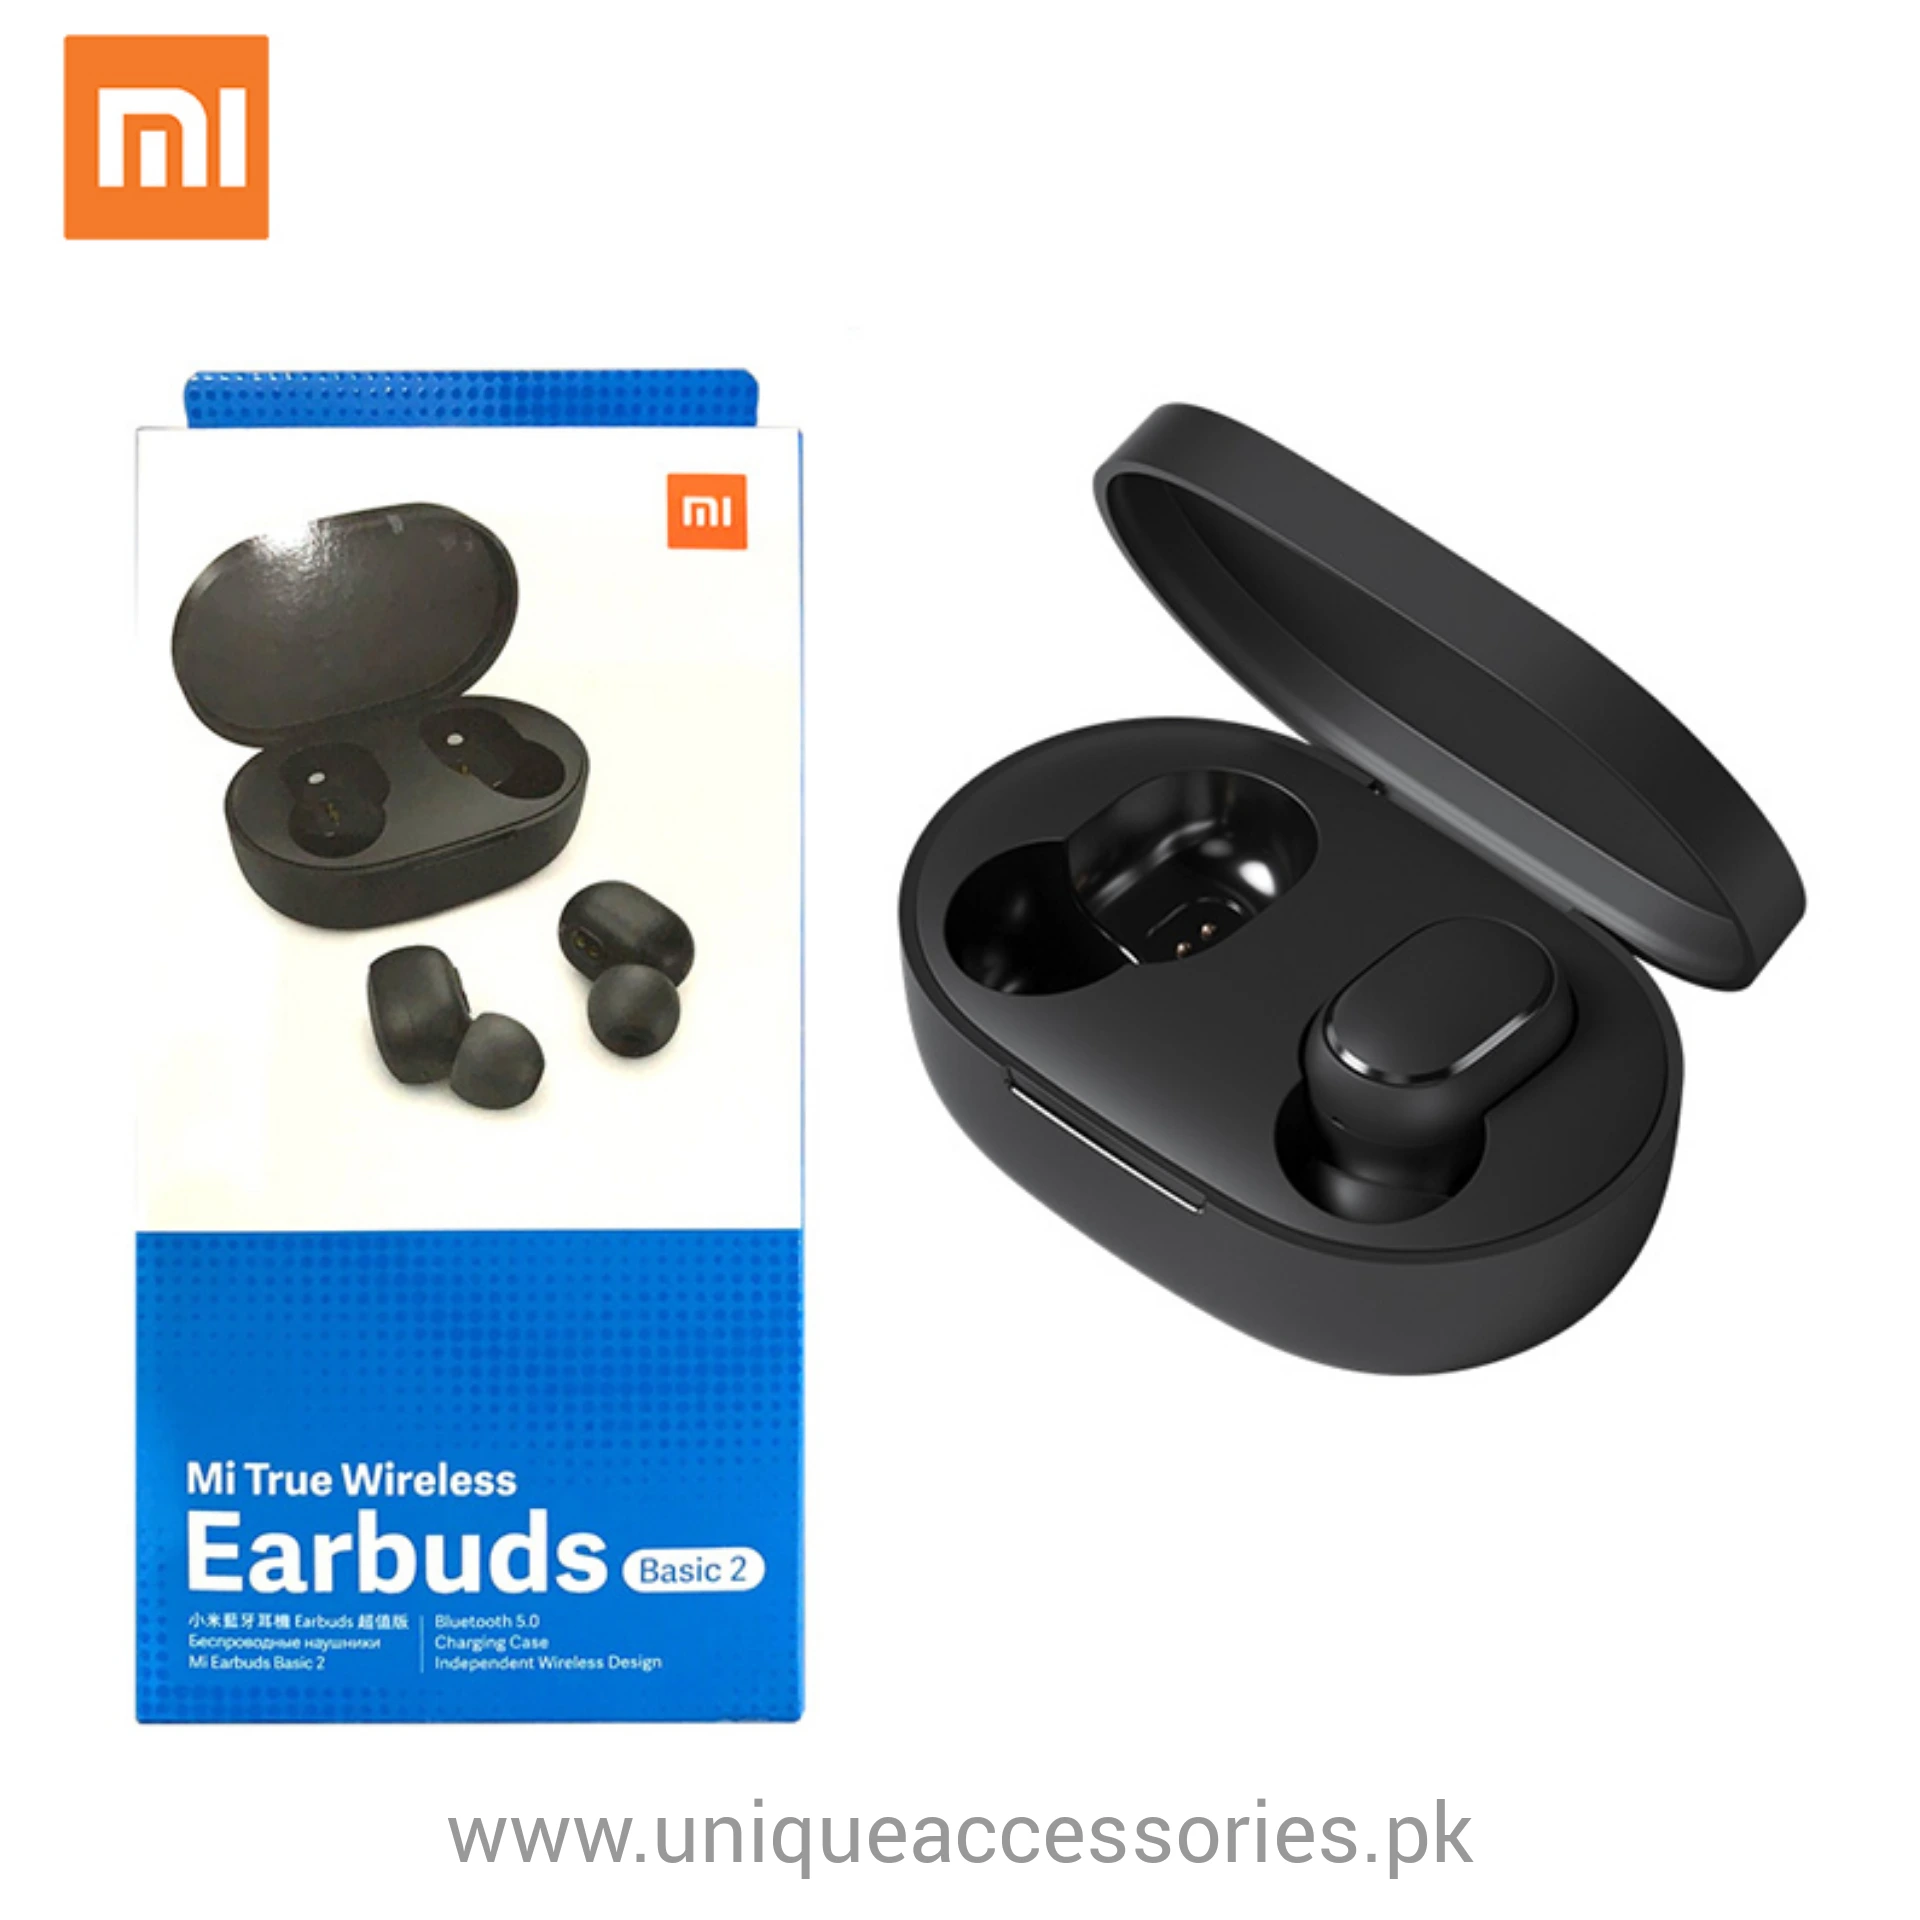 Mi Earbuds Basic 2 - Unique Accessories